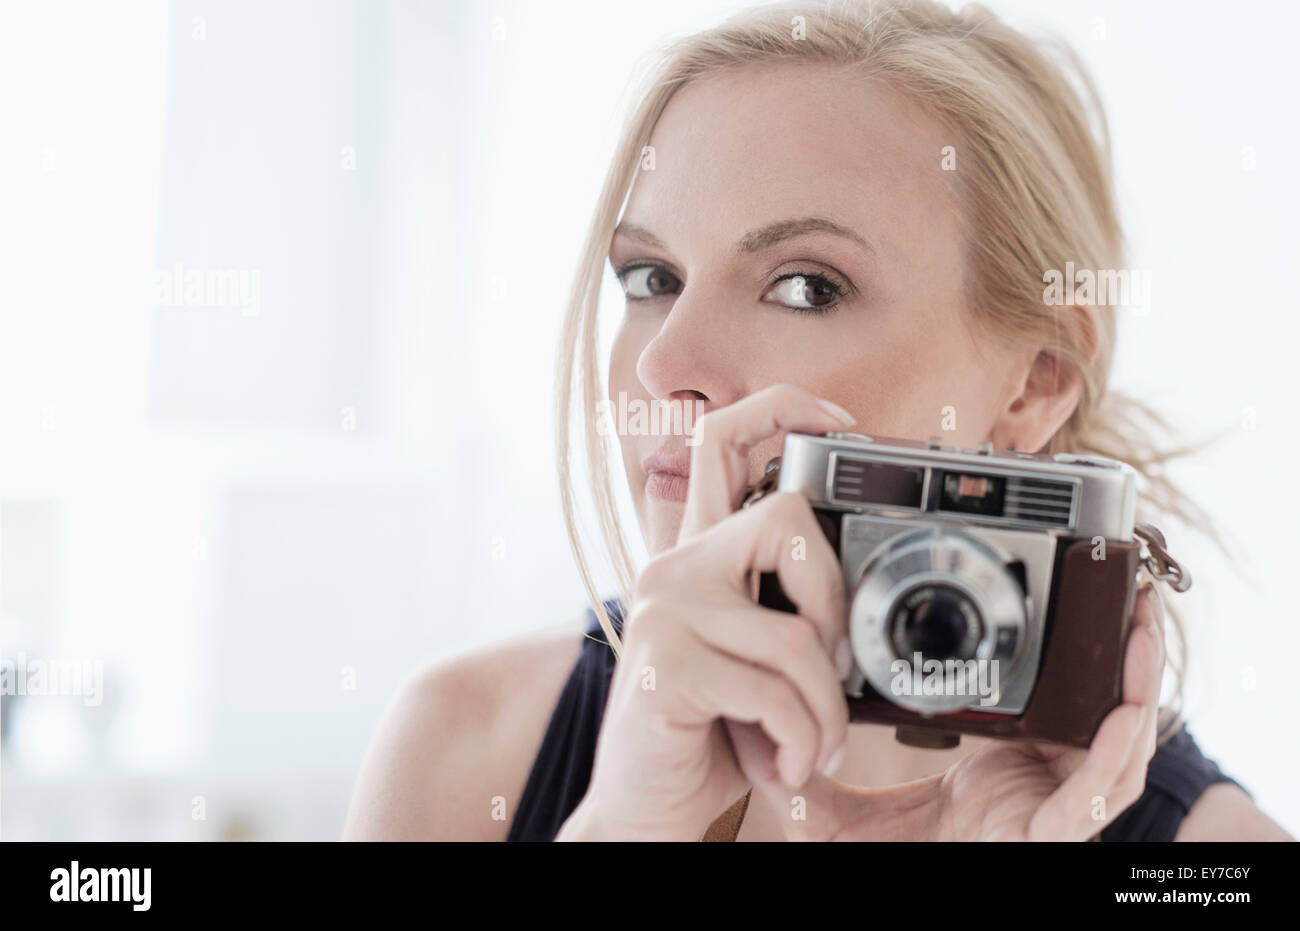 Woman holding digital camera Stock Photo